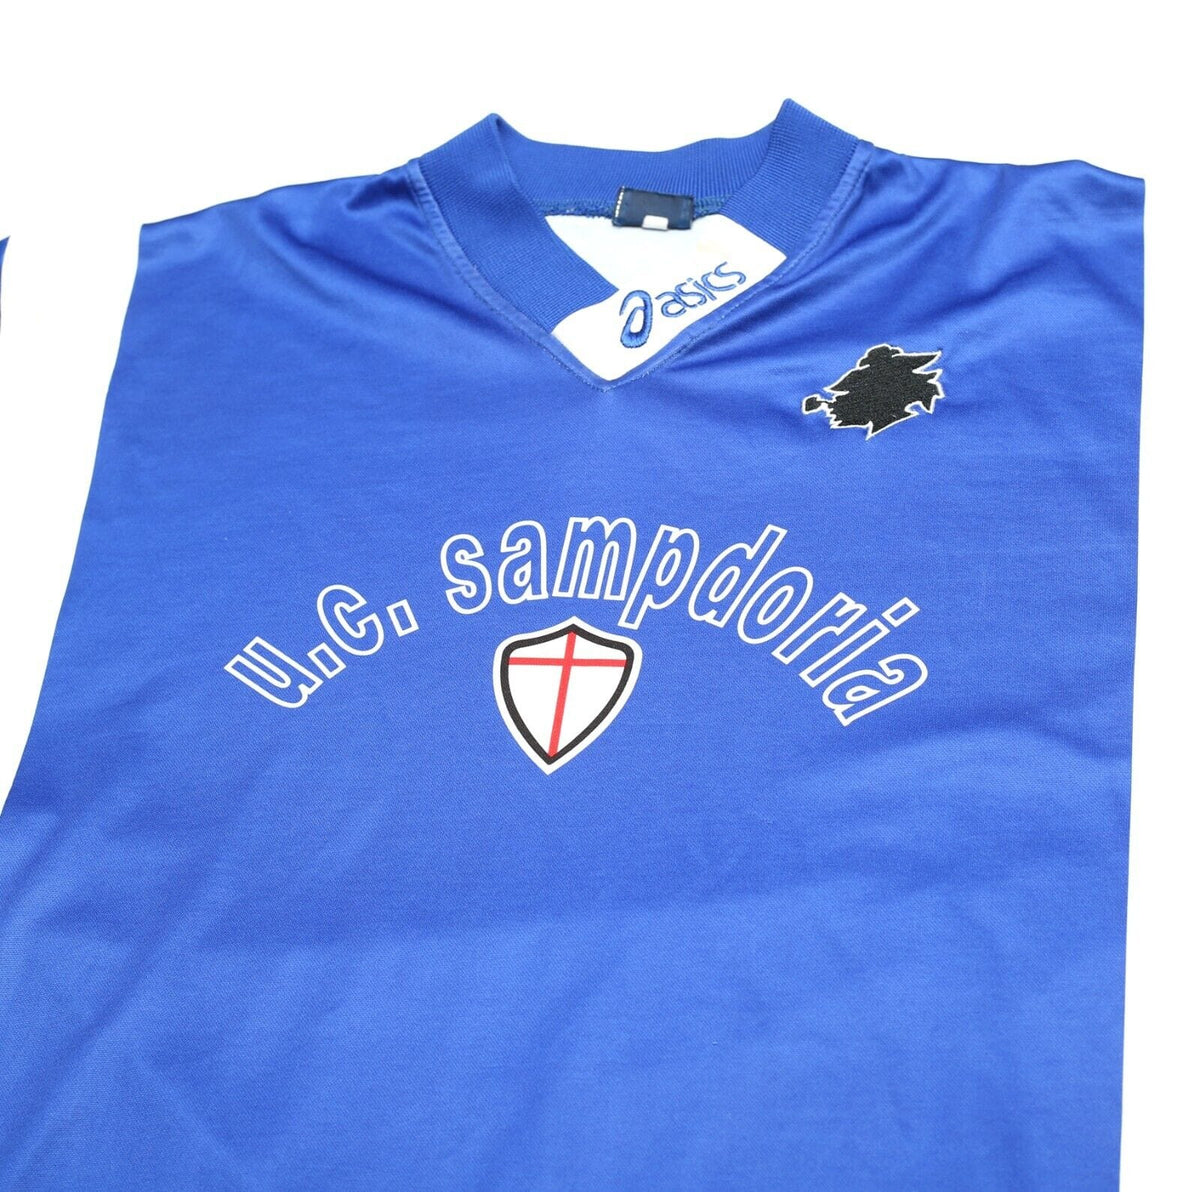 Sampdoria Home football shirt Maglia 1990 ASICS Soccer Jersey Size Large  40-42)